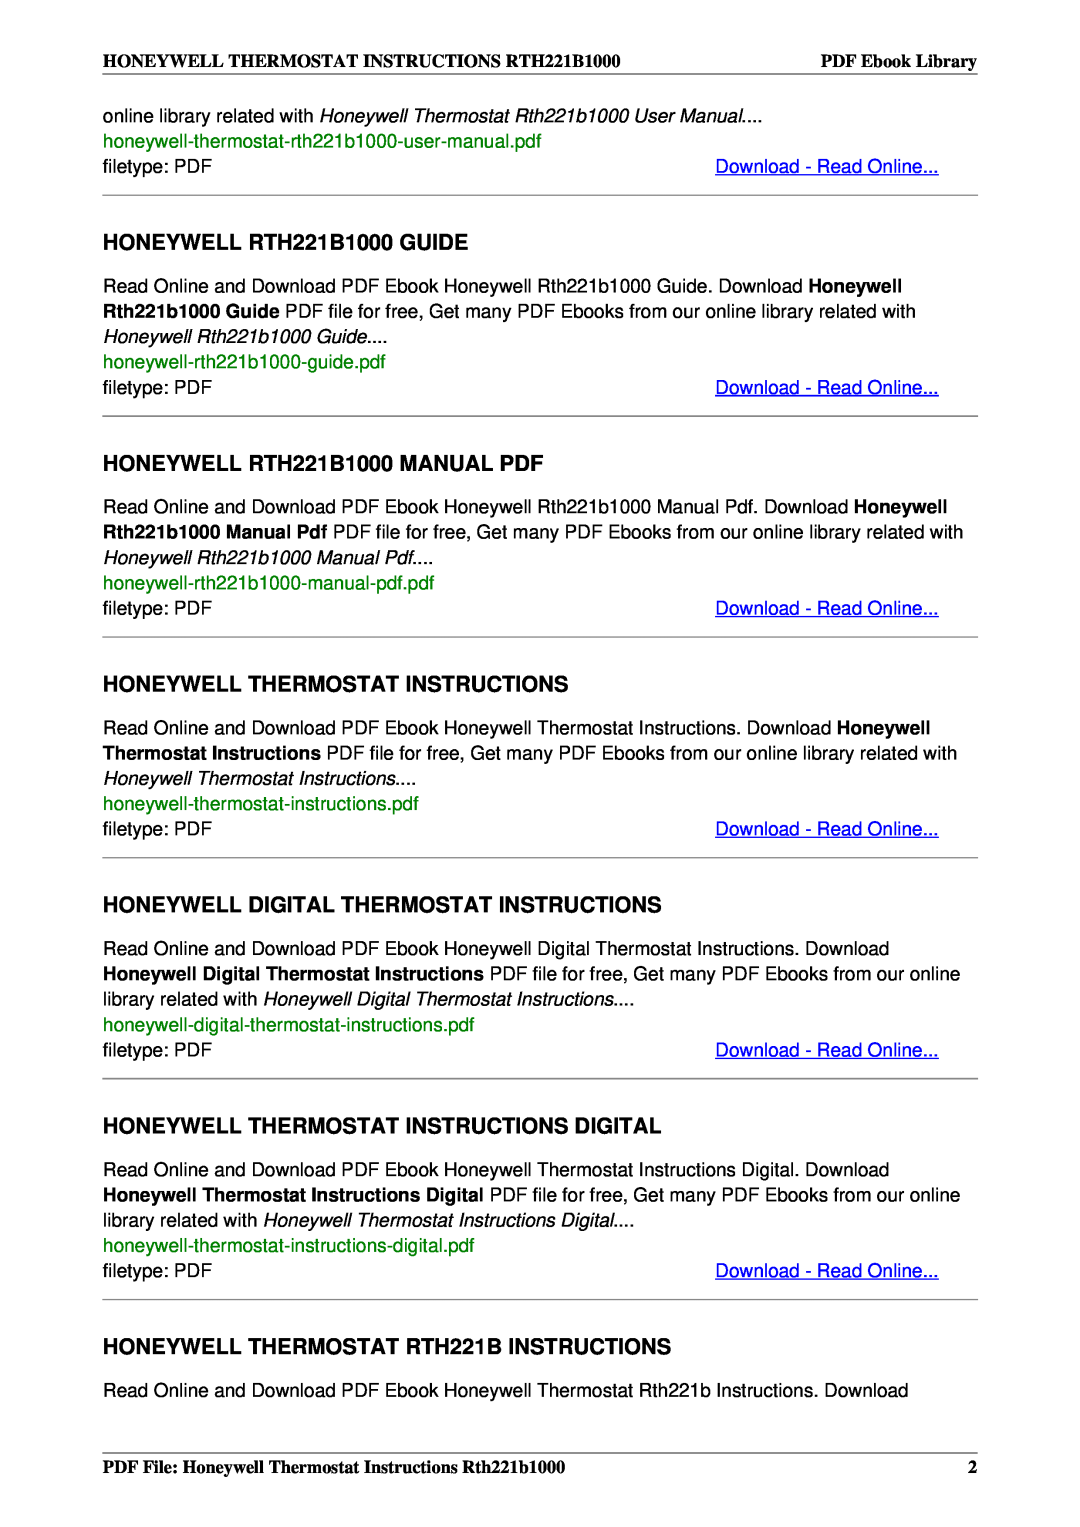 Honeywell user manual HONEYWELL RTH221B1000 GUIDE, HONEYWELL RTH221B1000 MANUAL PDF, Honeywell Thermostat Instructions 